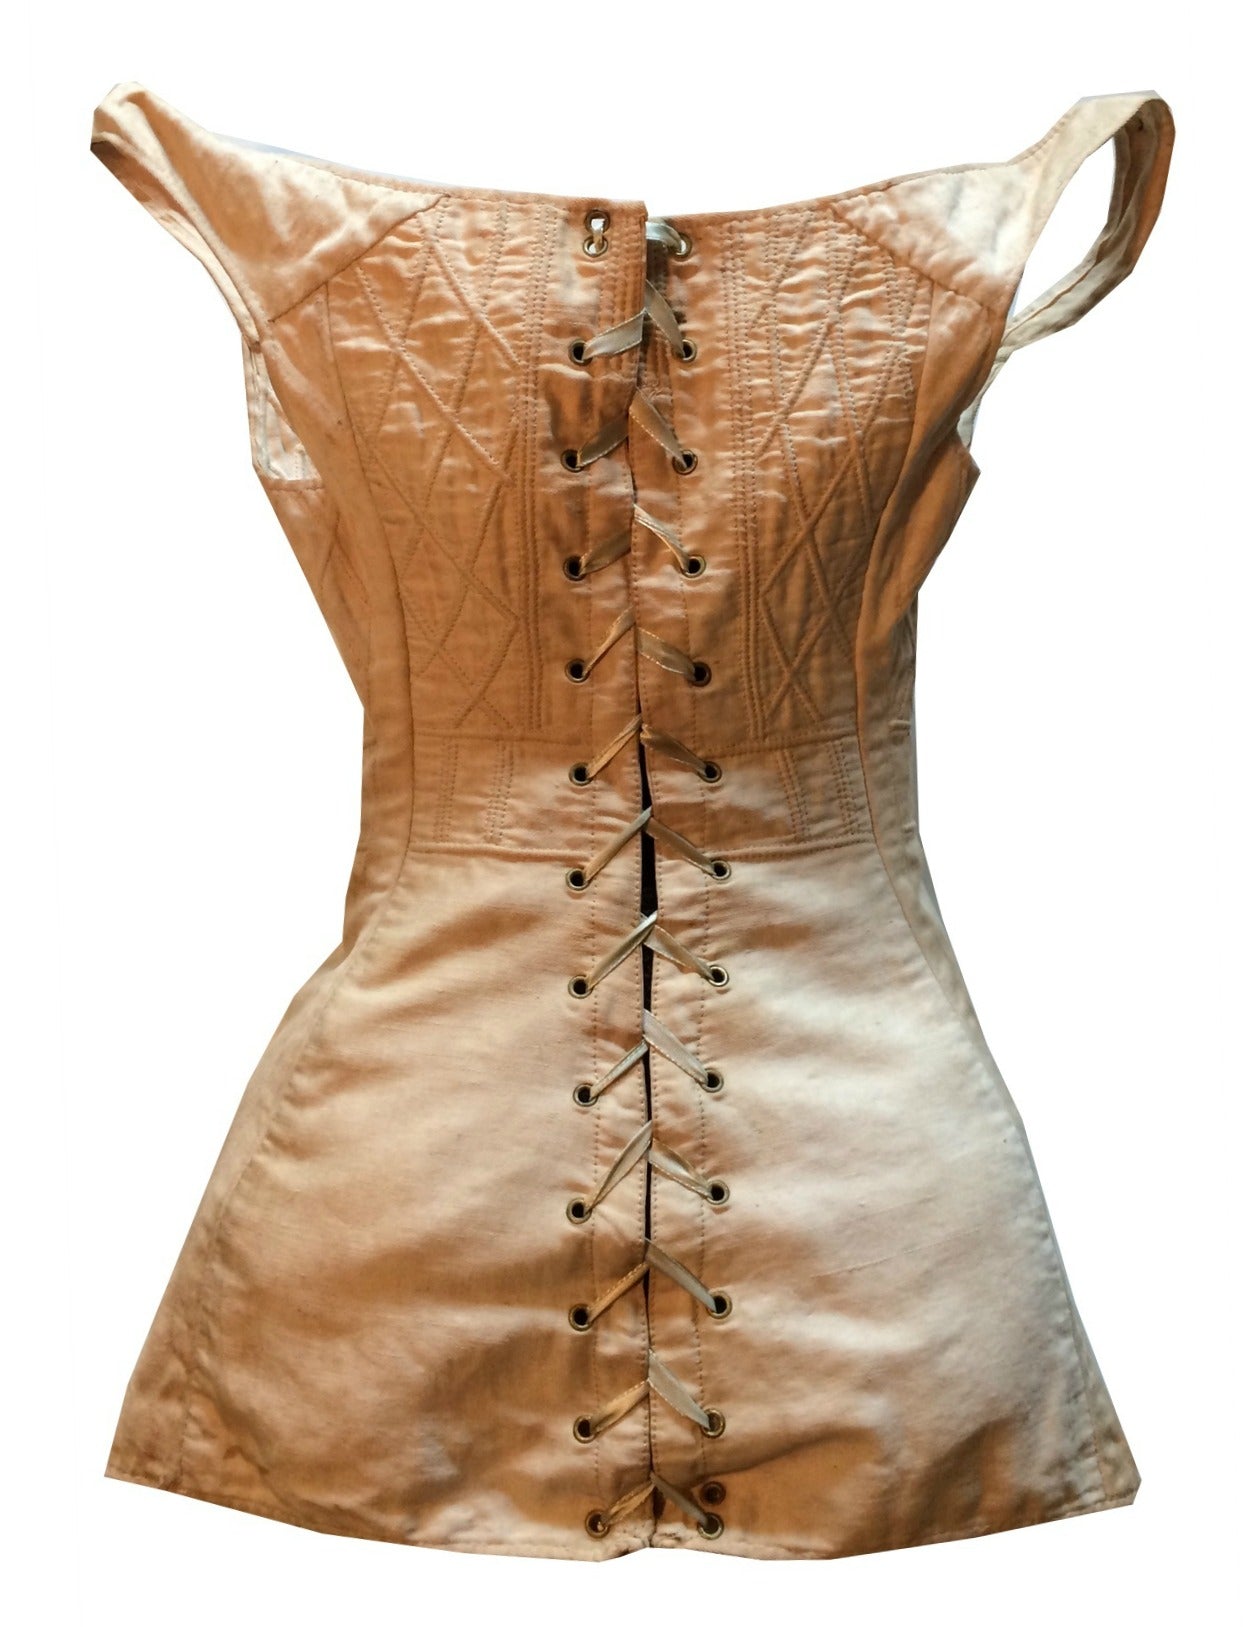 Candlelight Silk Regency Style Wedding Dress, Bodice and Corded Corset circa 1828